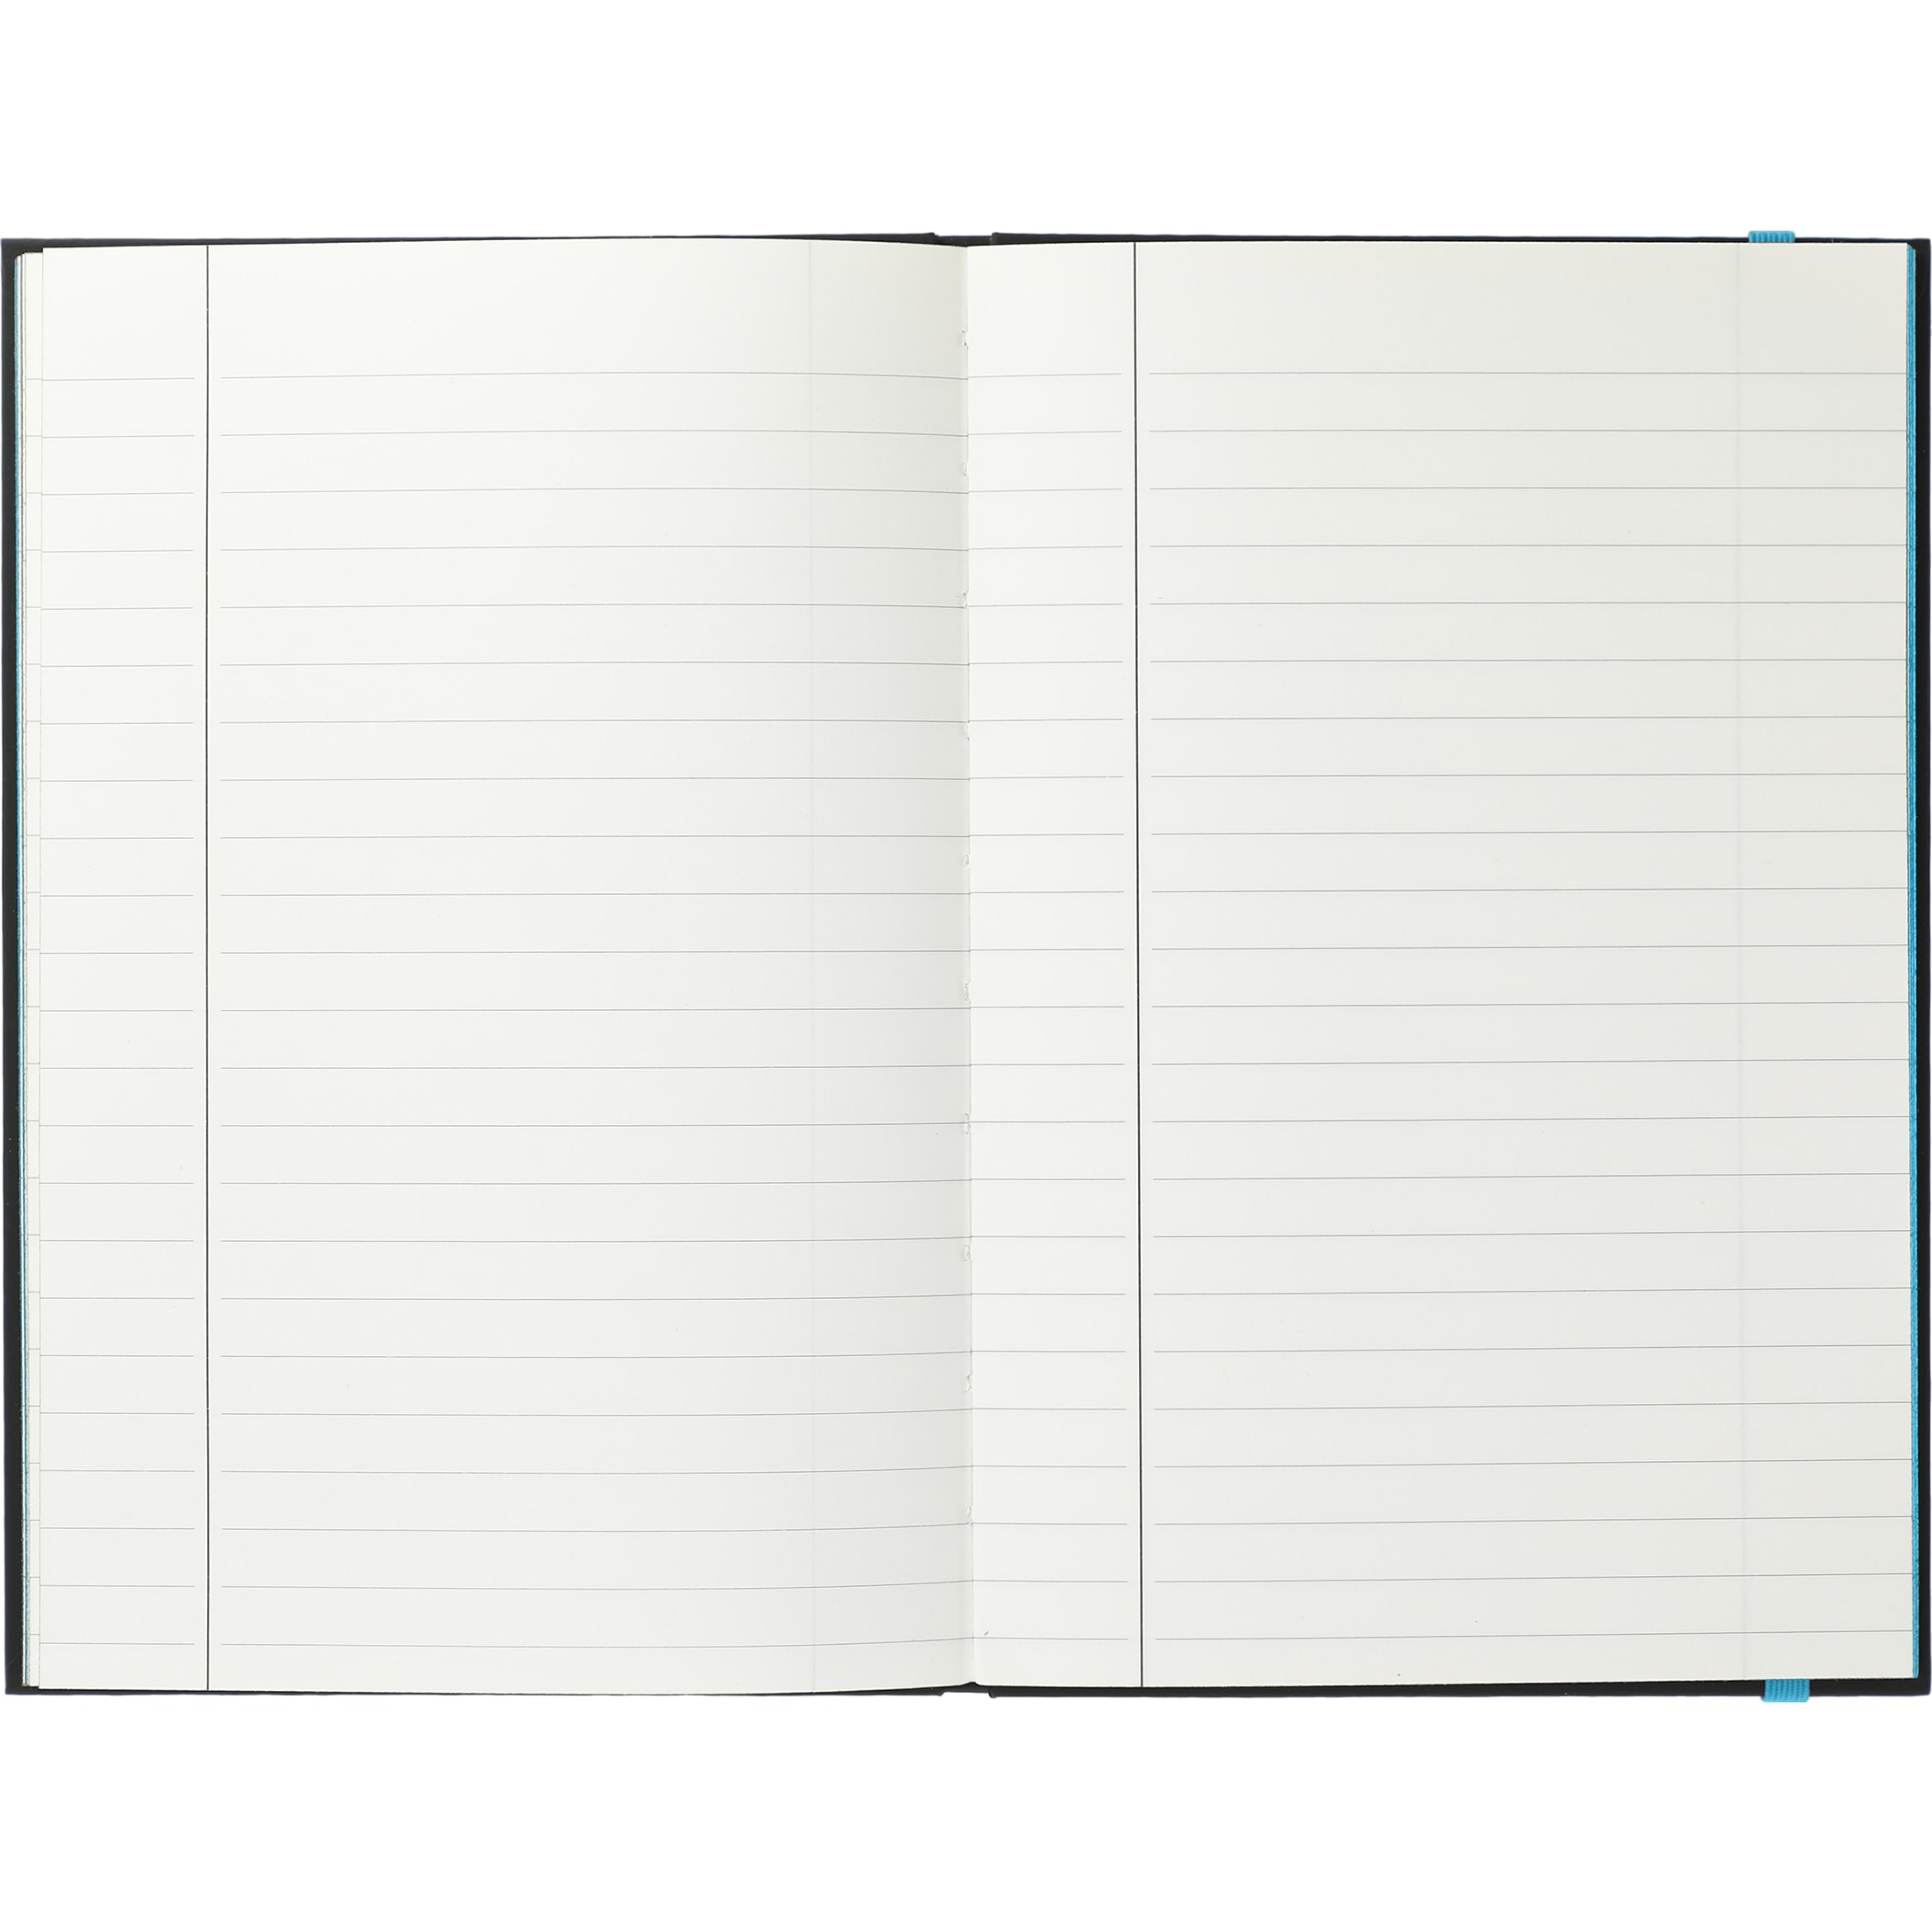 5.5" x 8.5" Color Pop Bound JournalBook®